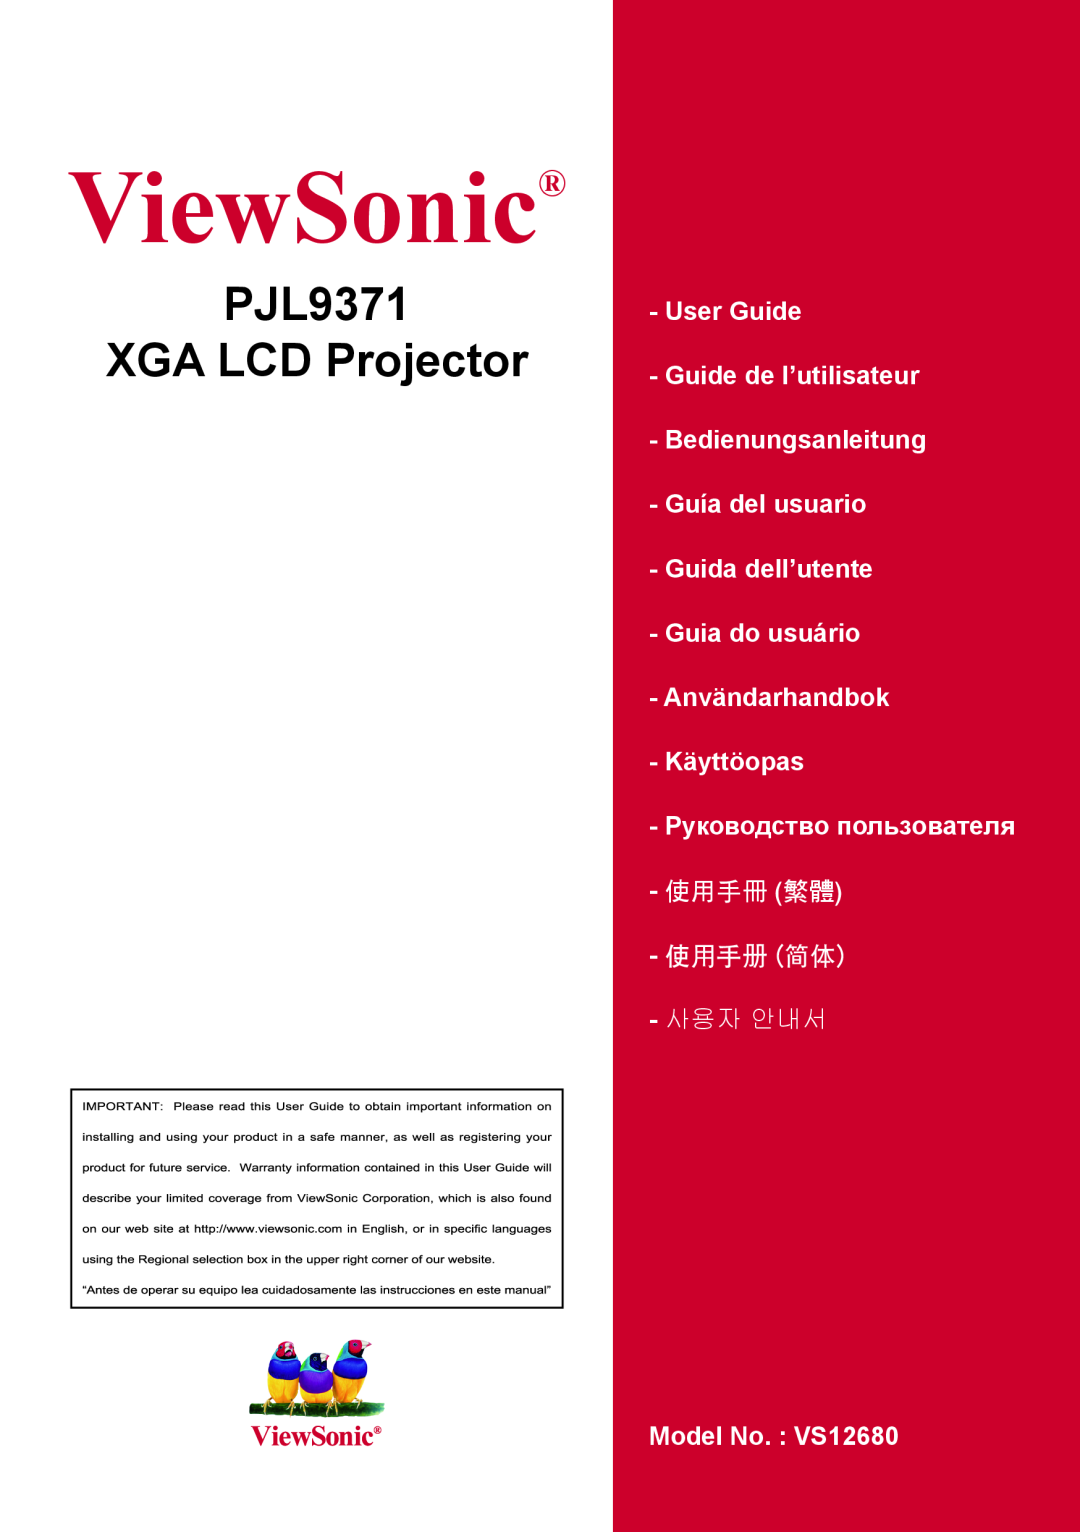 ViewSonic pjl9371 manual PJL9371 XGA LCD Projector, ViewSonic, User Guide Guide de l’utilisateur, 使用手冊 繁體 使用手冊 簡體, 사용자 안내서 